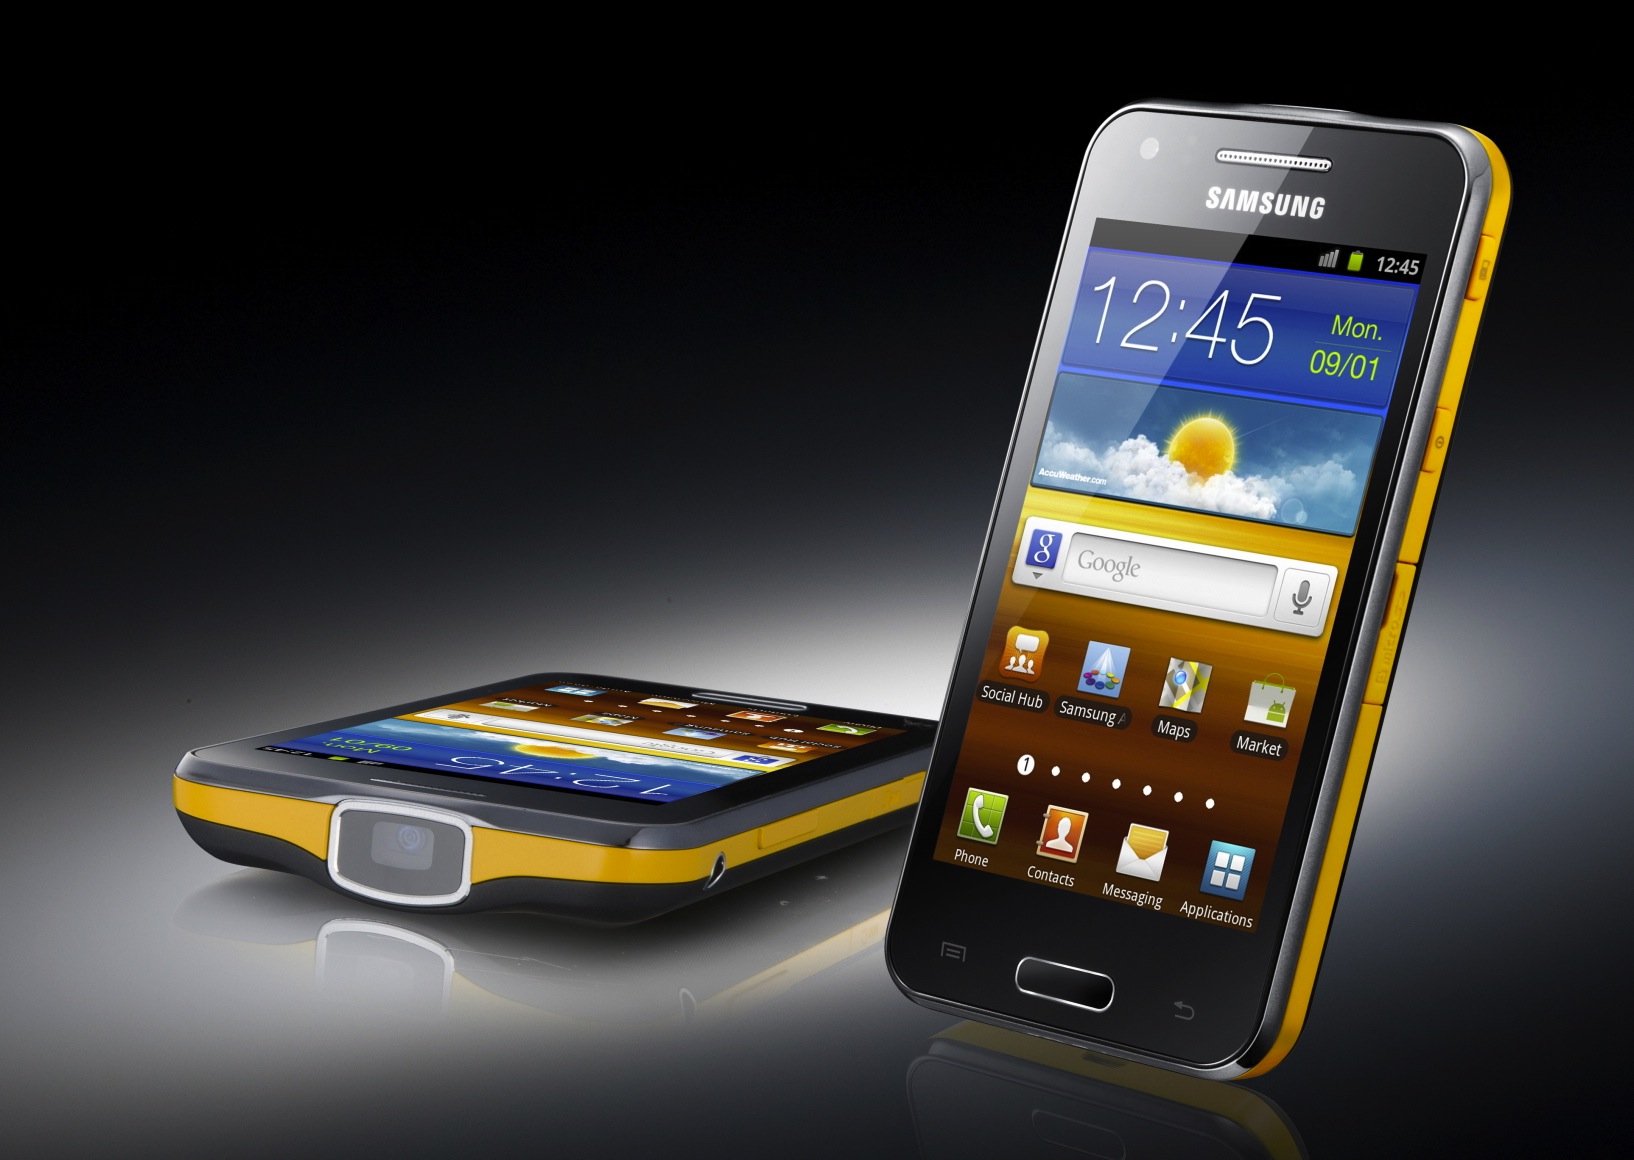 Samsung Debuts HD Projector Android Phone - Galaxy Beam & More